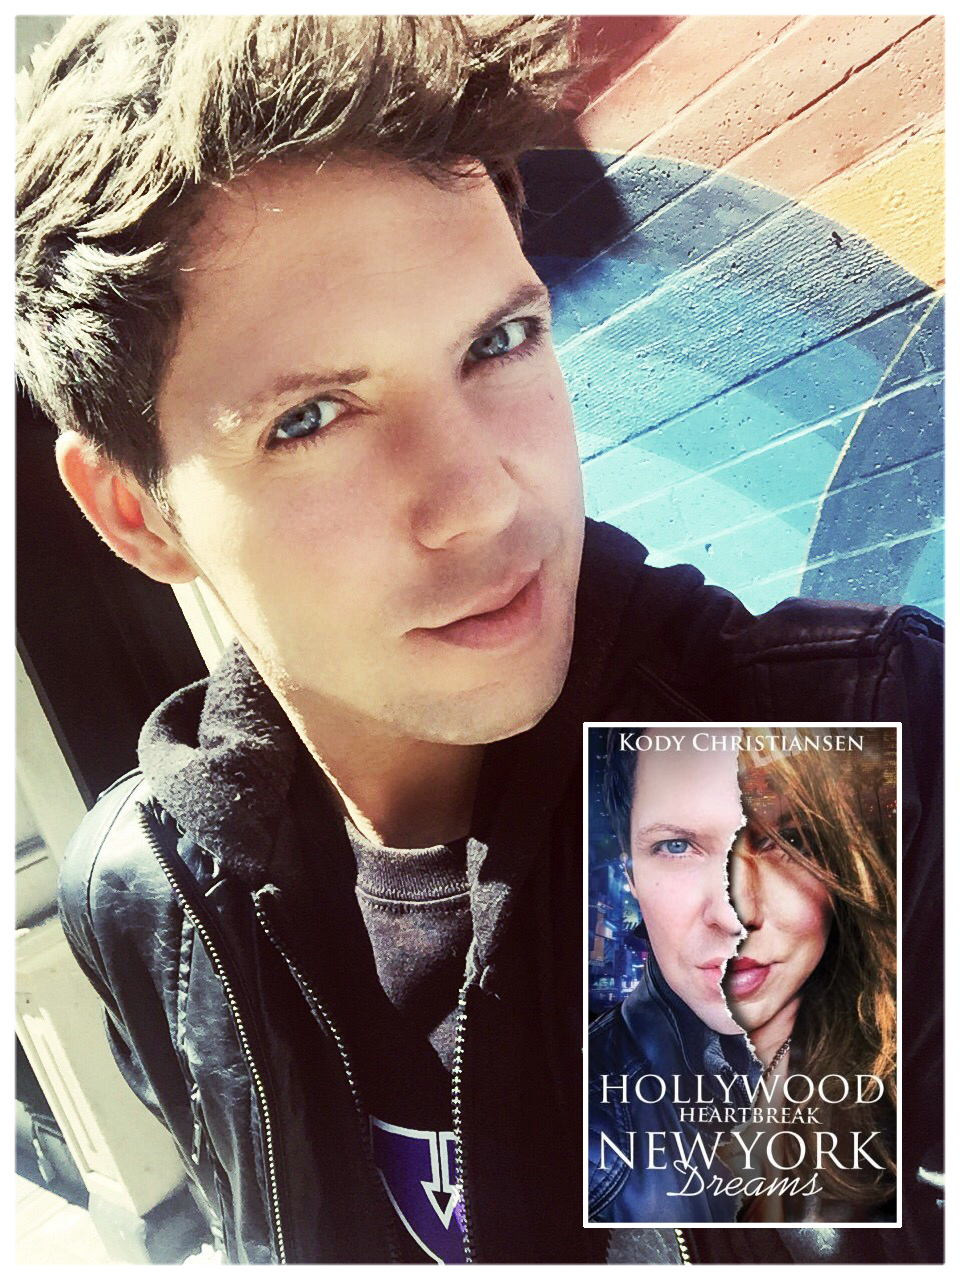 Kody Christiansen author of Hollywood Heartbreak | New York Dreams